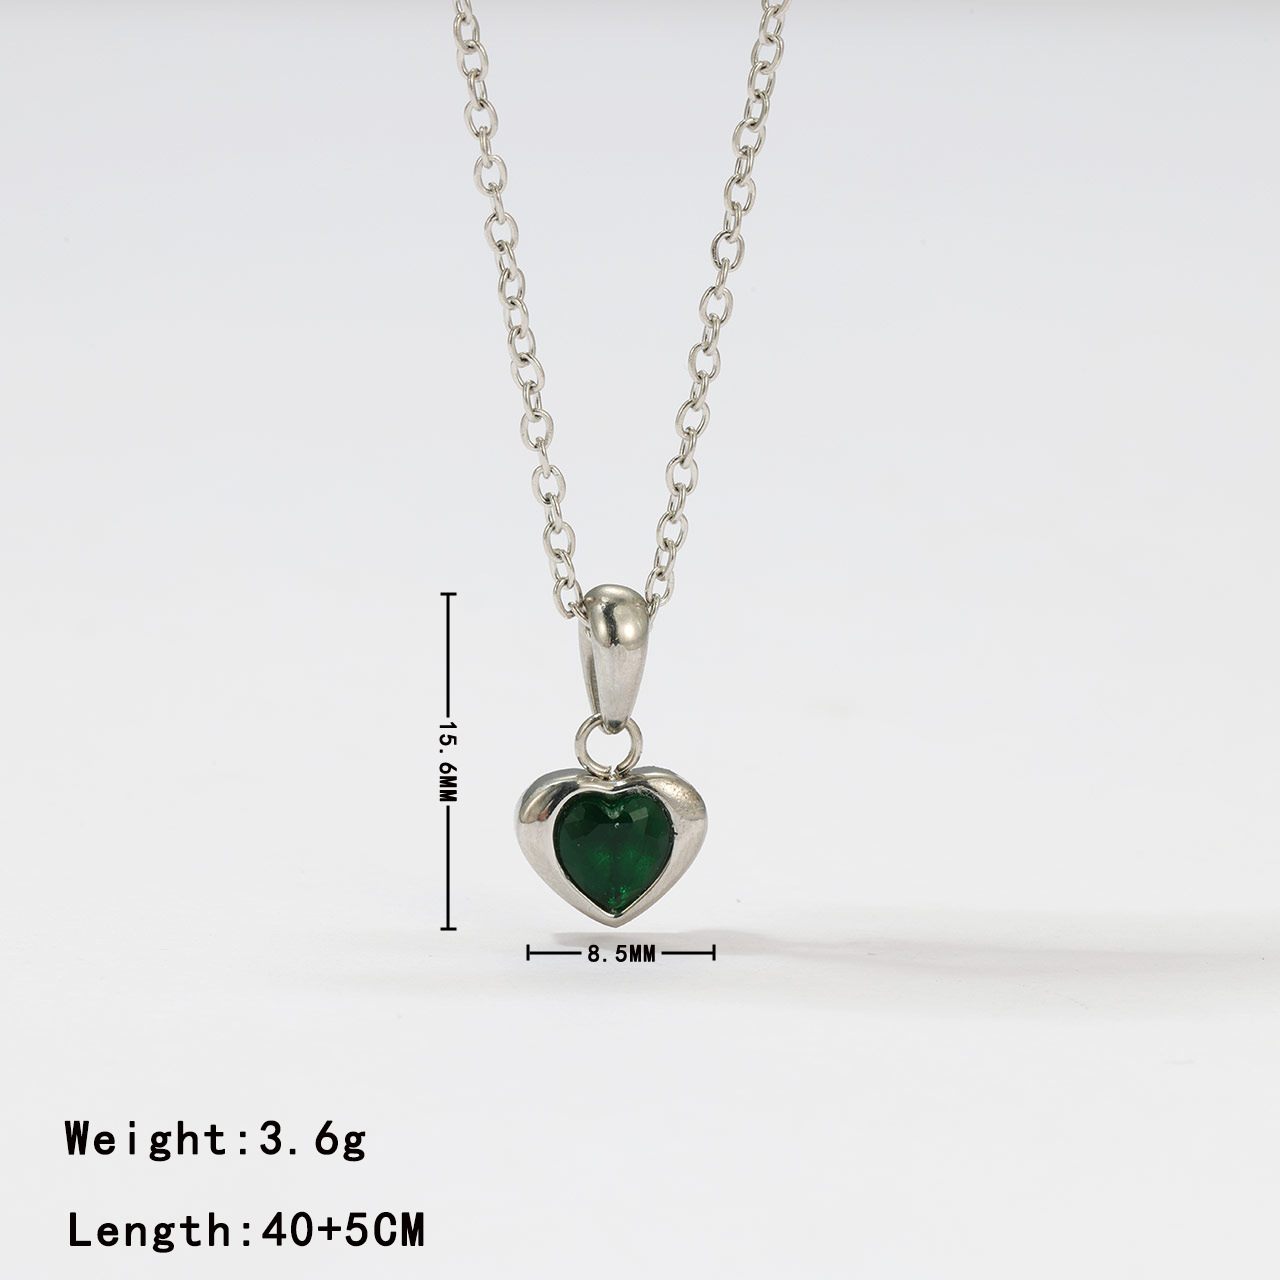 8:Necklace - Platinum colour green zircon